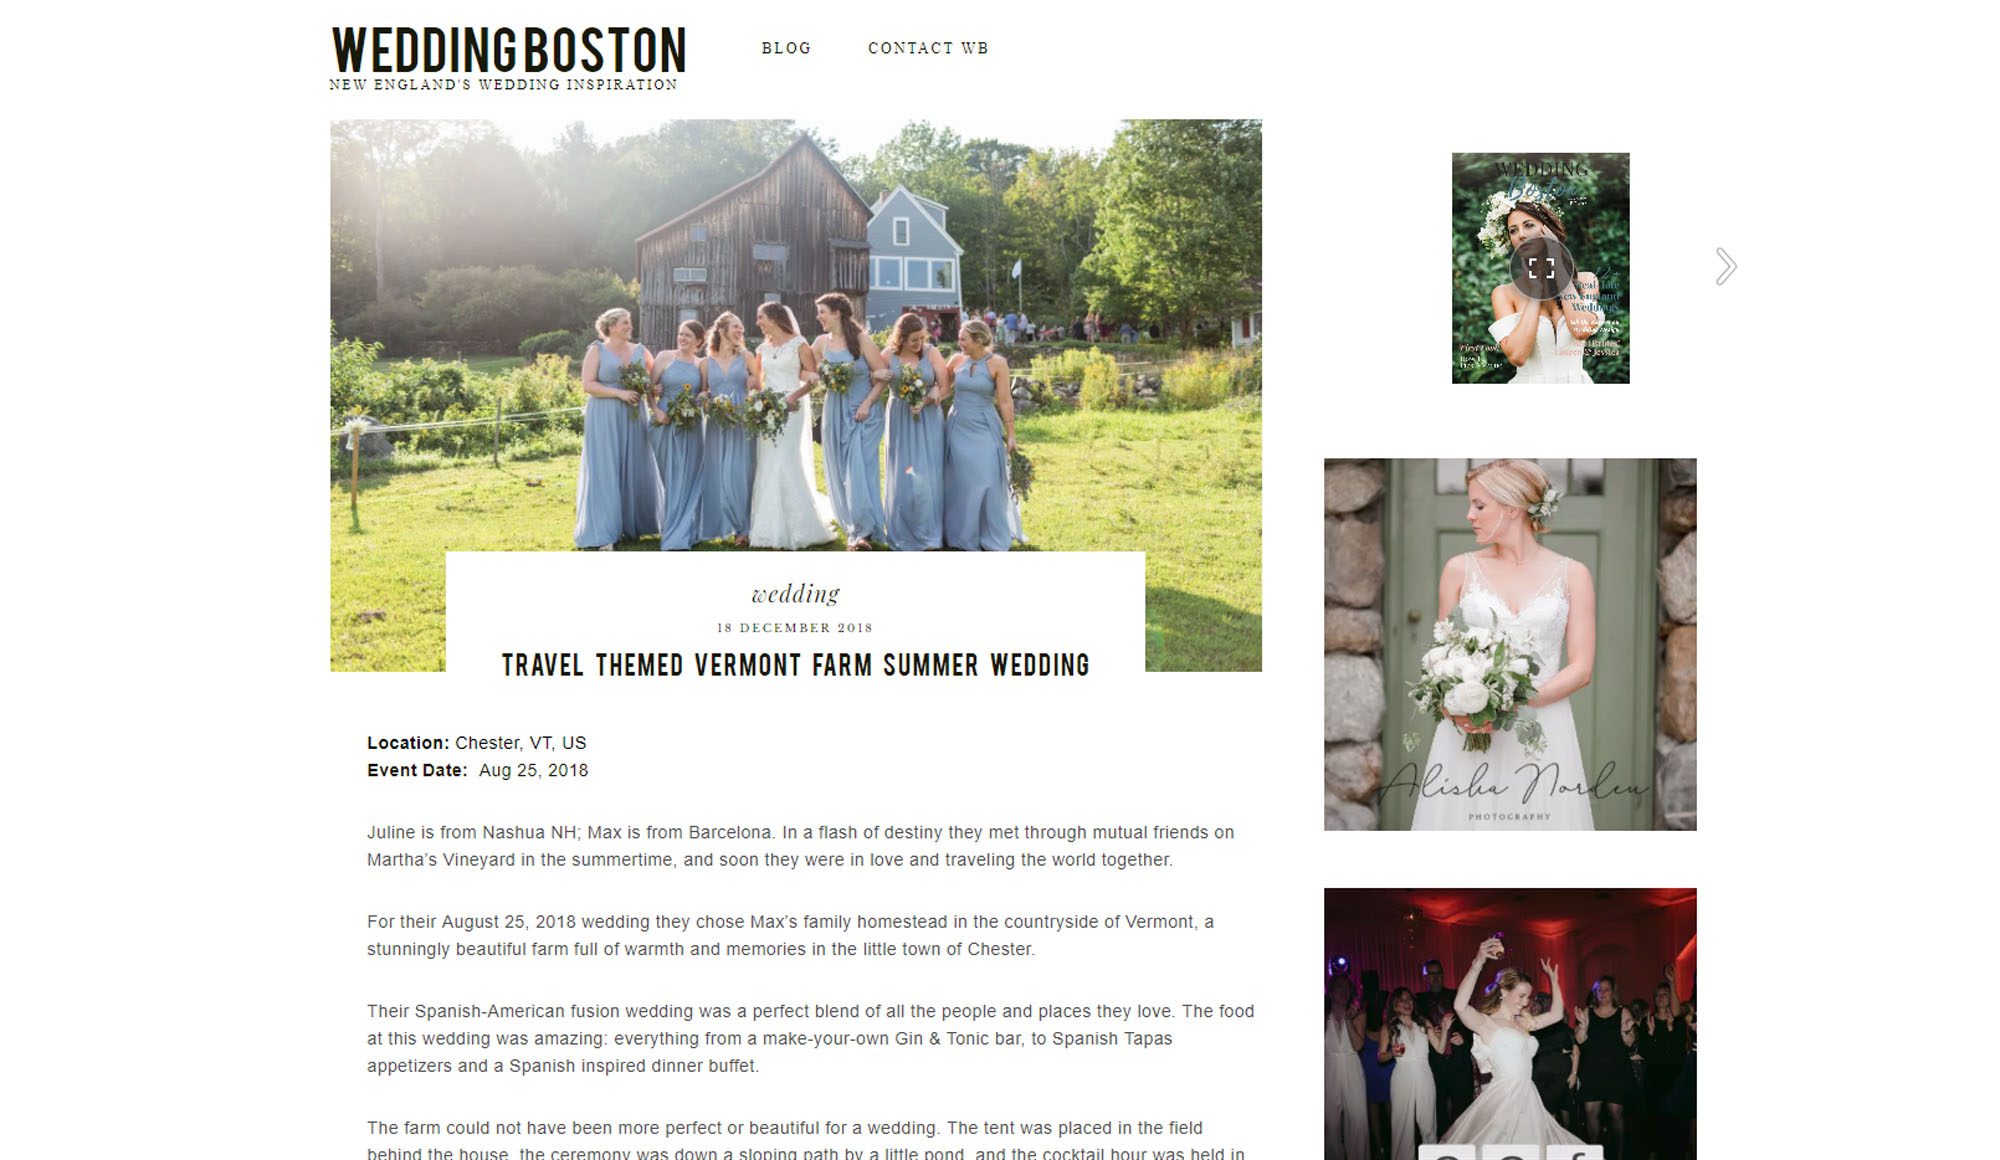 Vermont Wedding photographed by Erika Follansbee featured on Wedding Boston blog